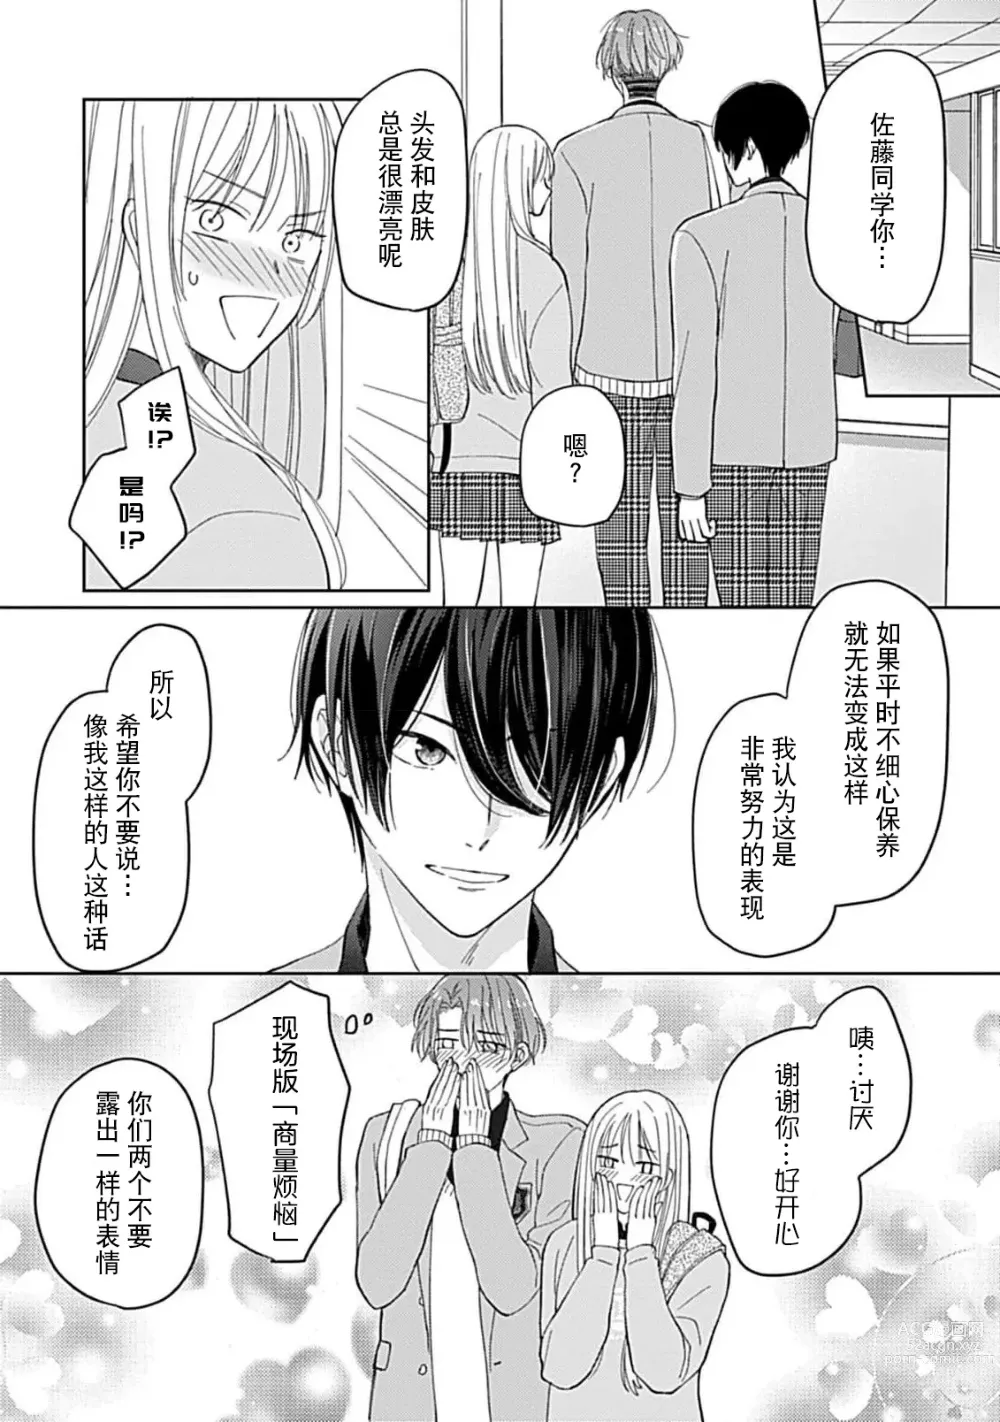 Page 52 of manga 恋情与秘密难以映照 Ch. 1-2